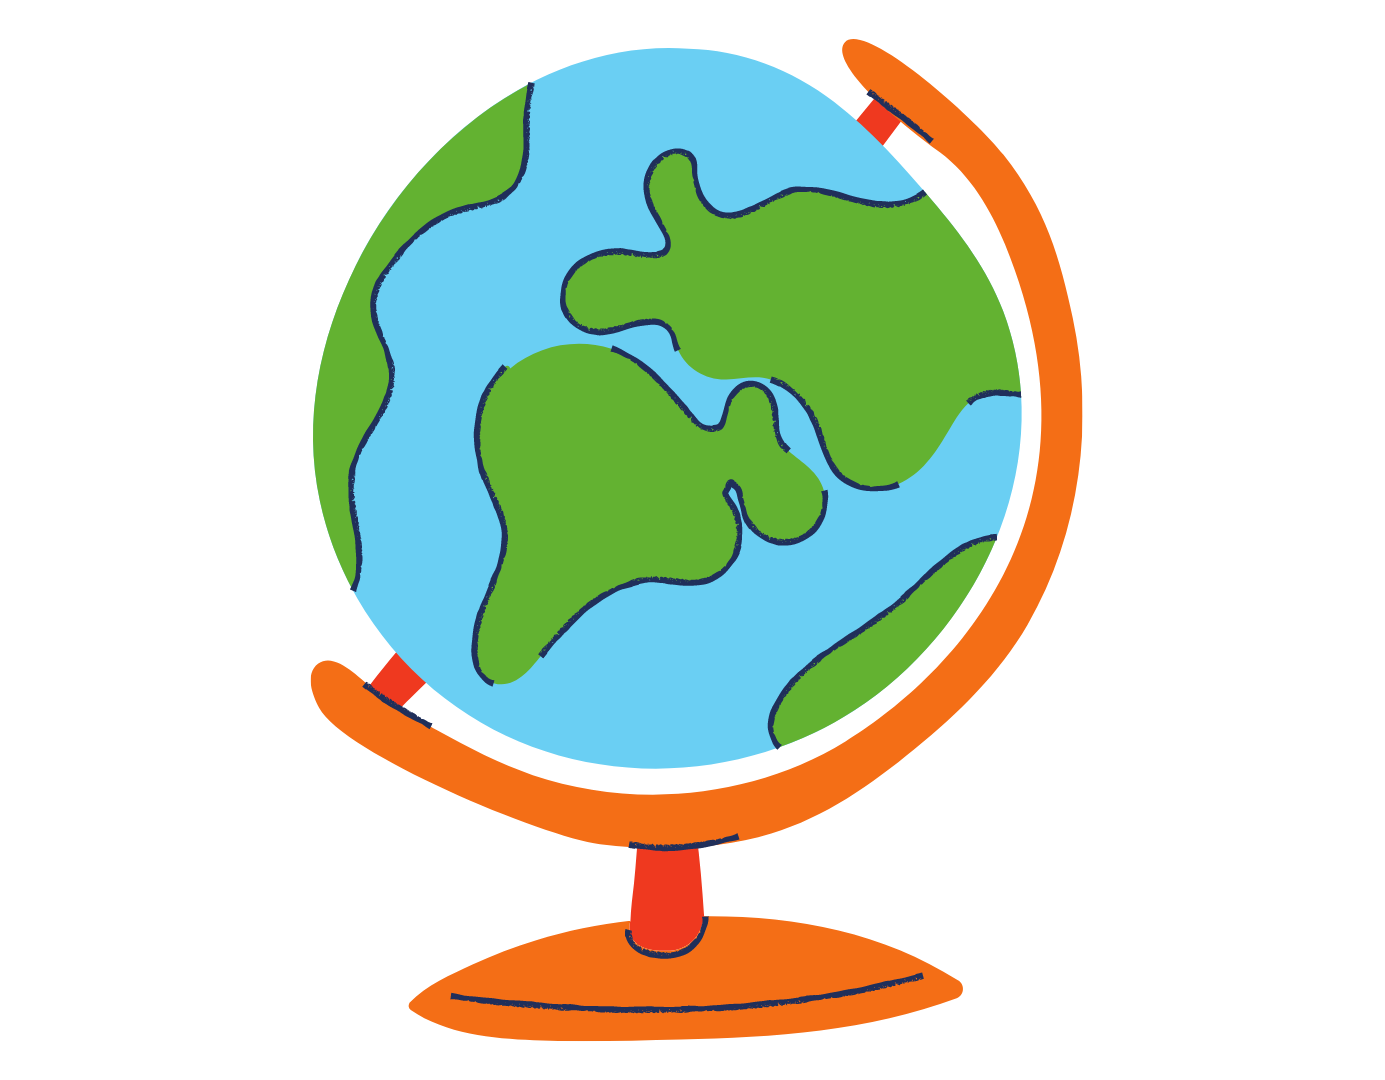 Illustrated globe